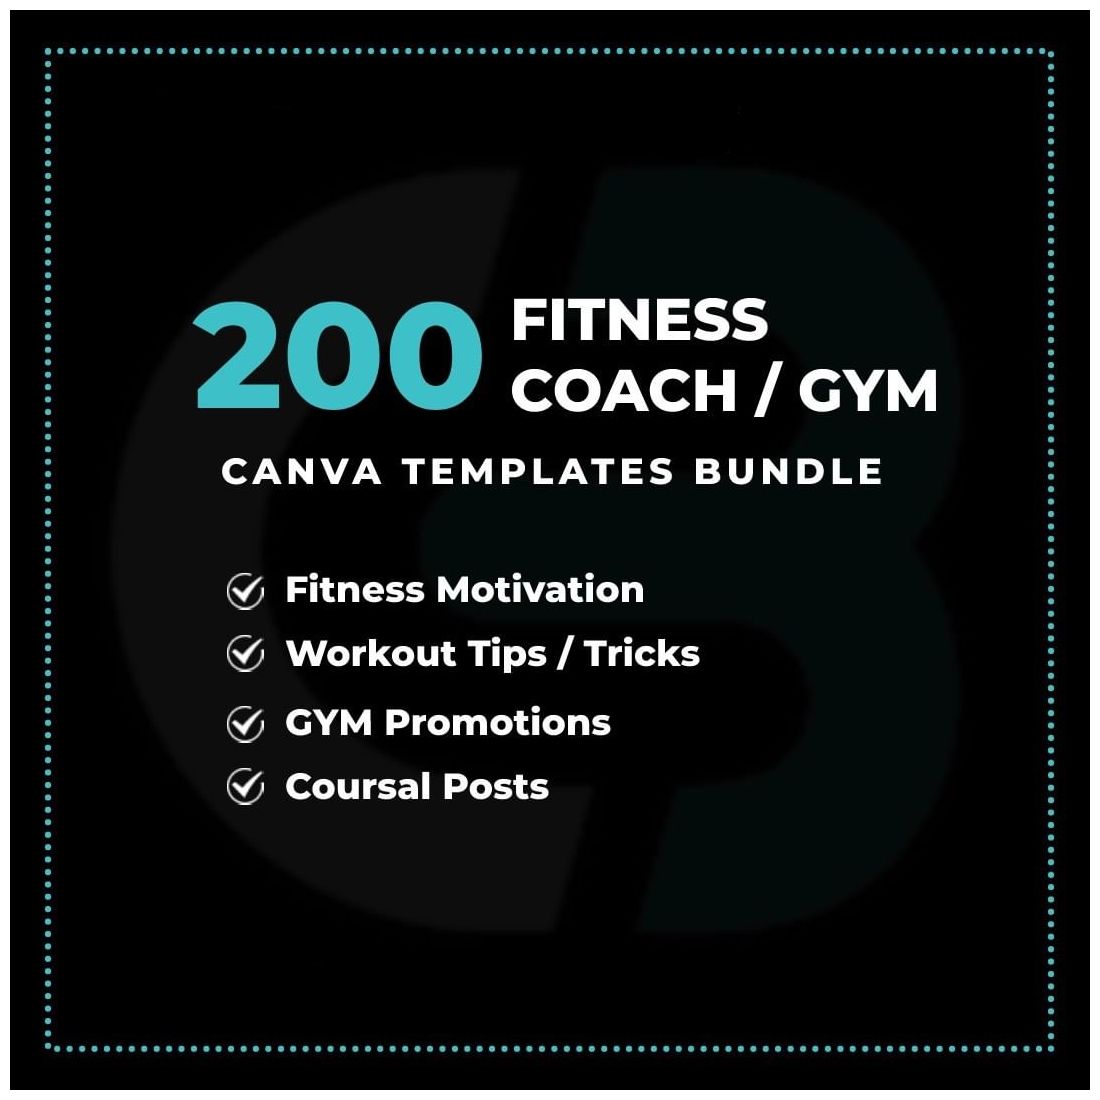 Fitness Coach Canva Templates Bundle cover image.